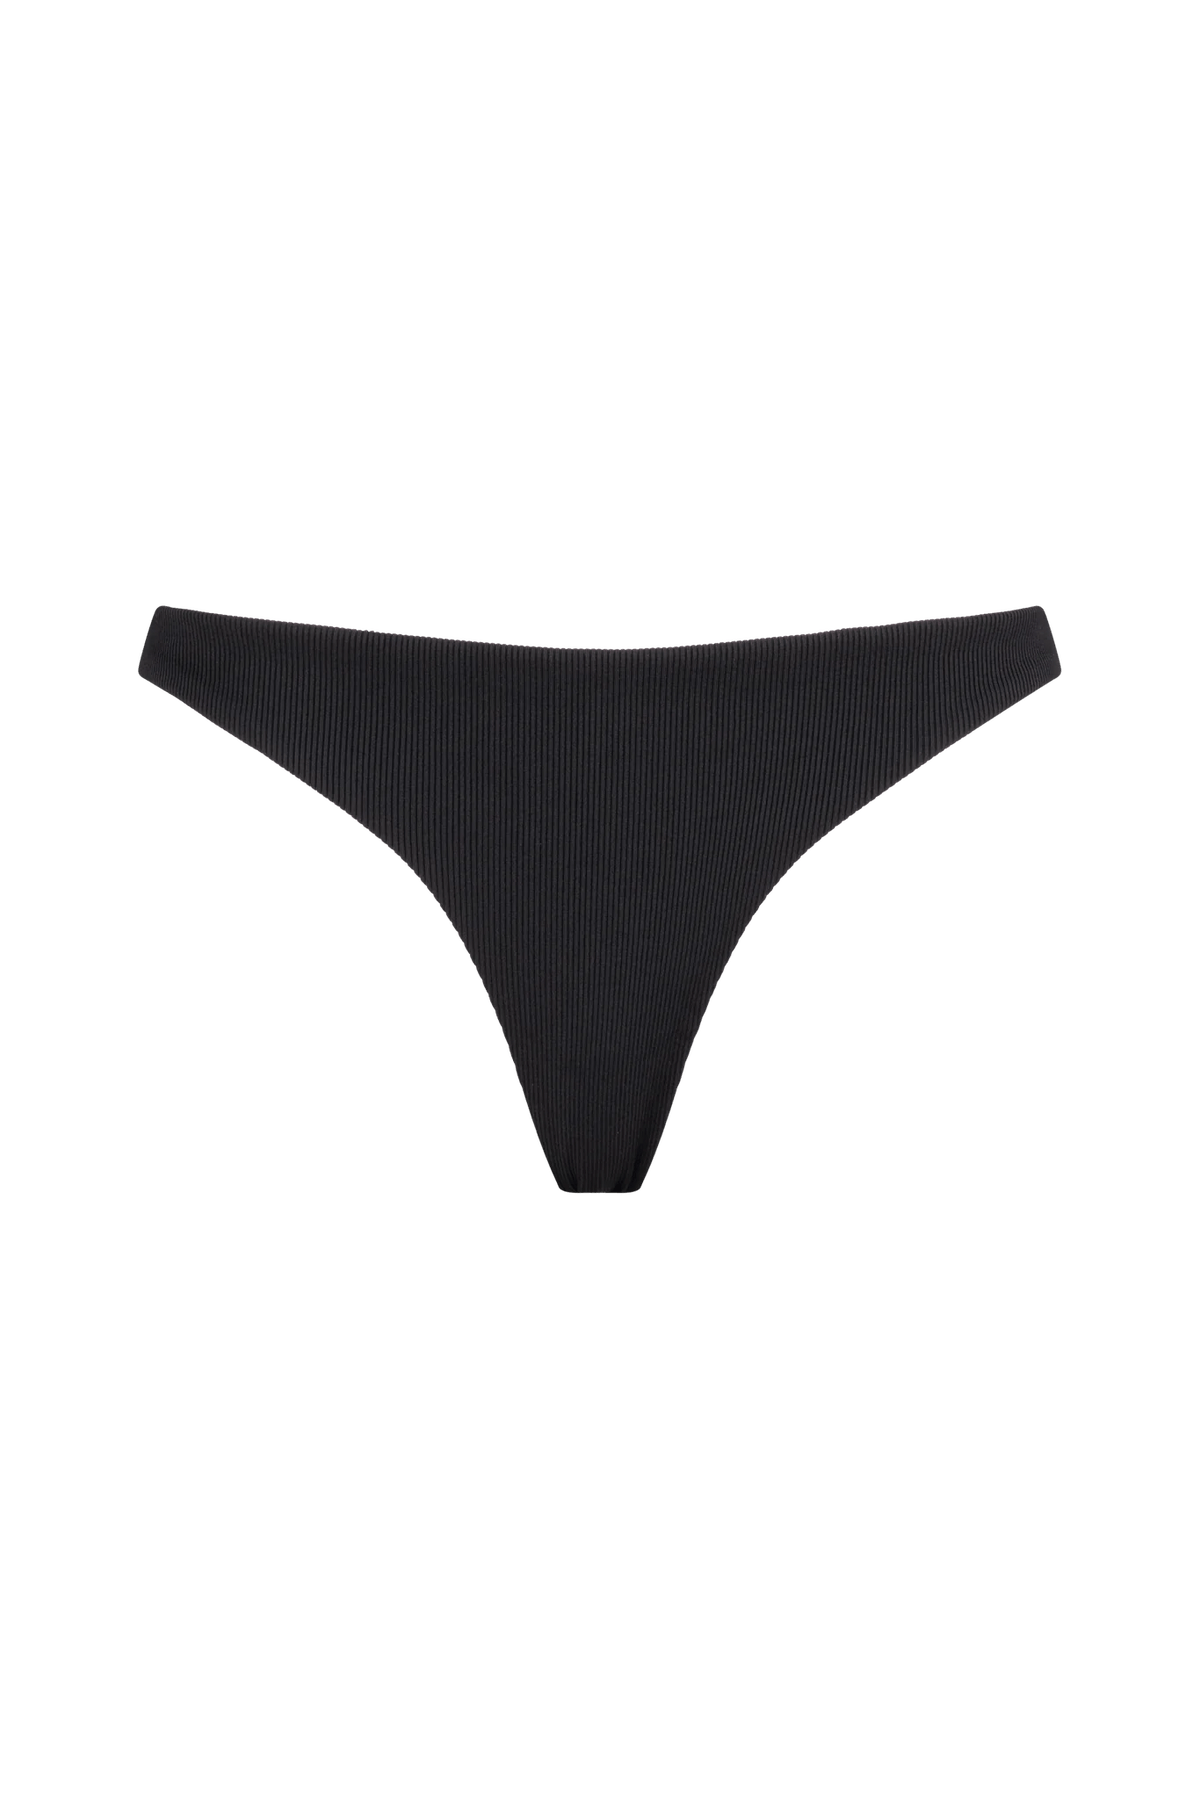 Swim Classics Tiger Bottom - Licorice - Tigerlily - Splash Swimwear  - bikini bottoms, Nov 23, Womens - Splash Swimwear 